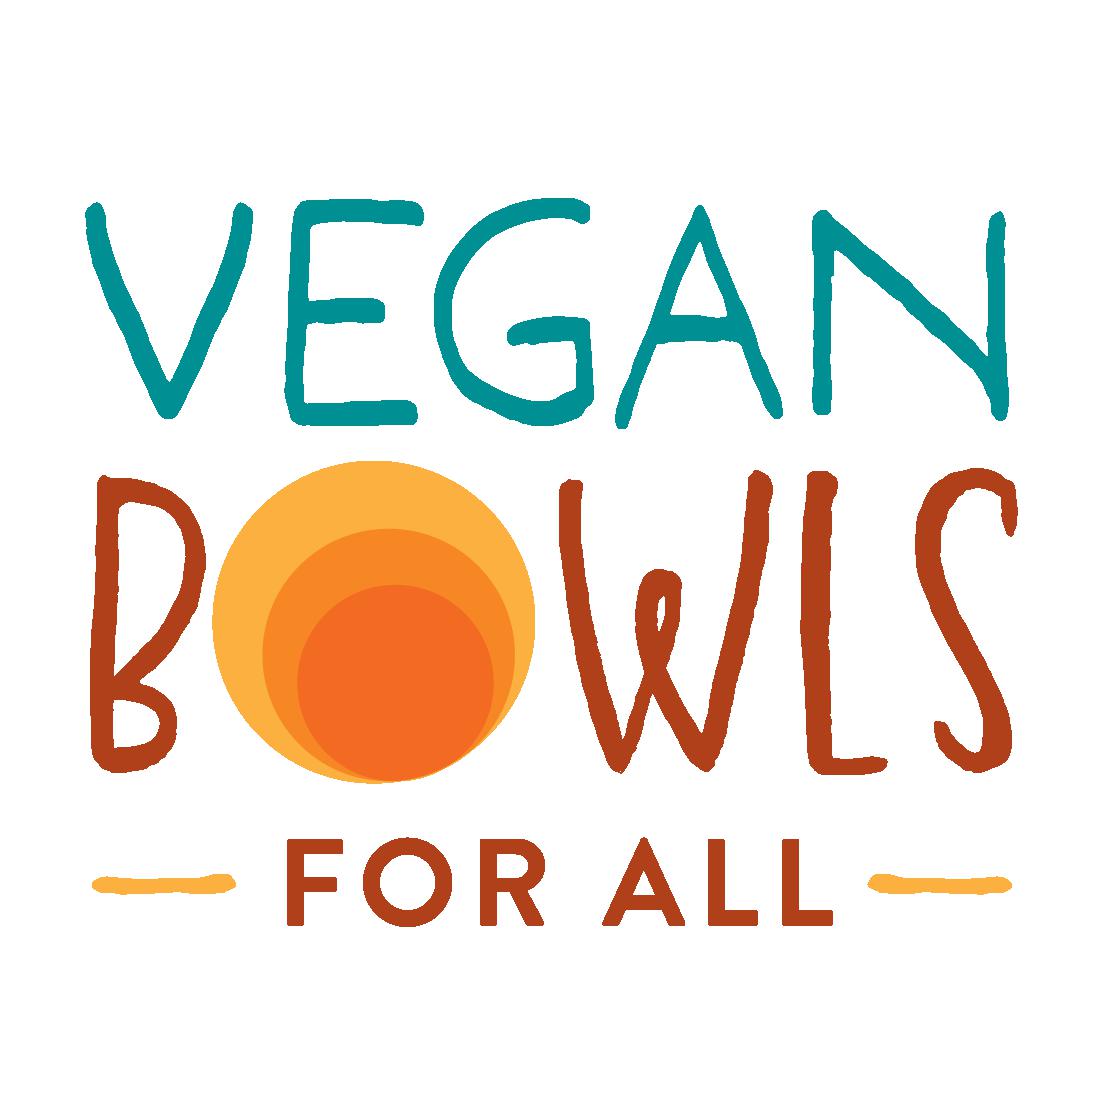 Vegan Bowls For All Long Beach